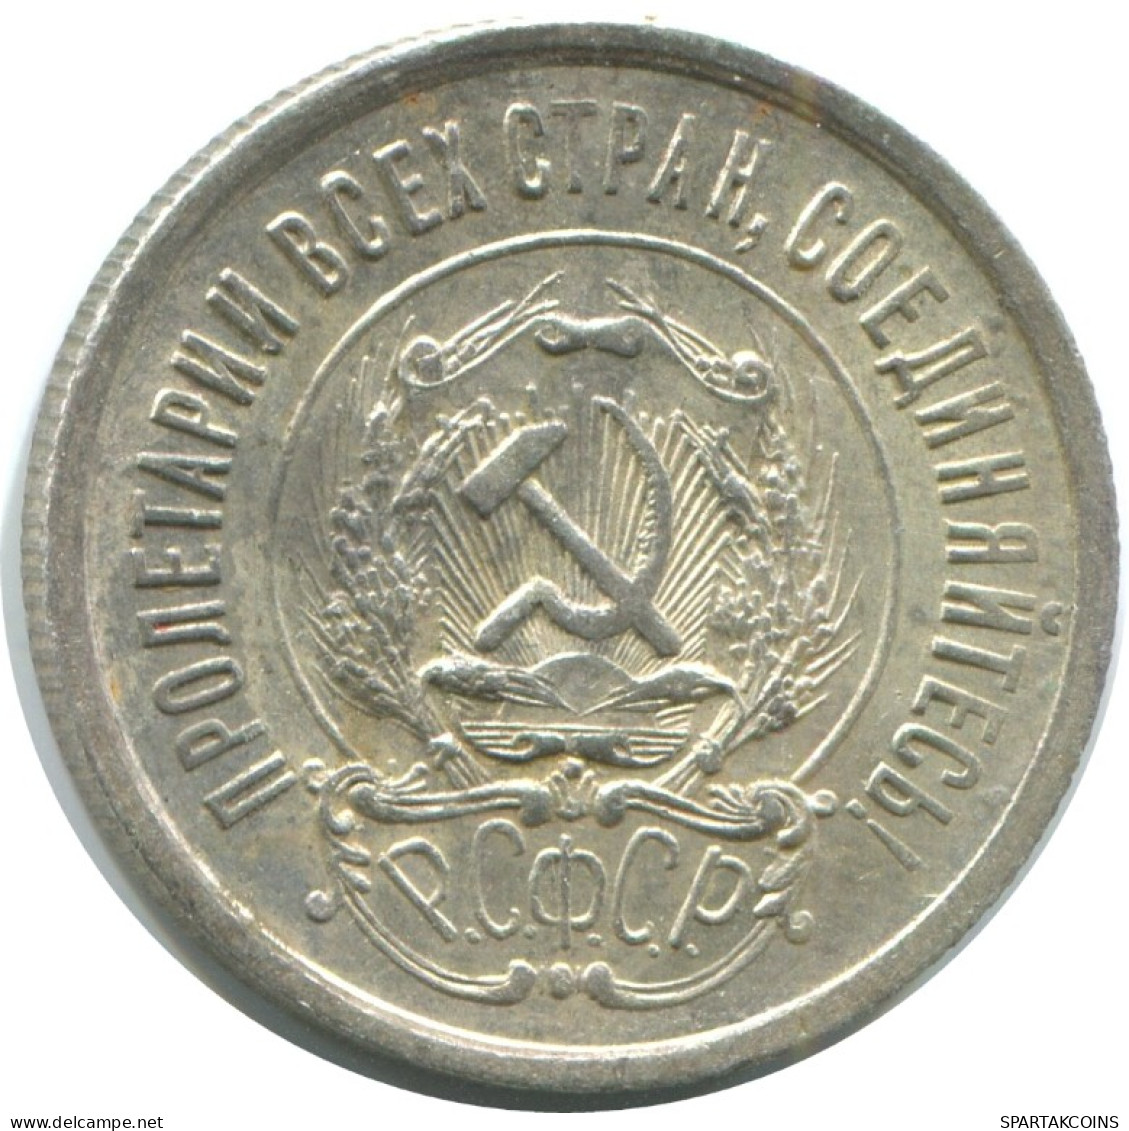 20 KOPEKS 1923 RUSSIA RSFSR SILVER Coin HIGH GRADE #AF586.4.U.A - Russia